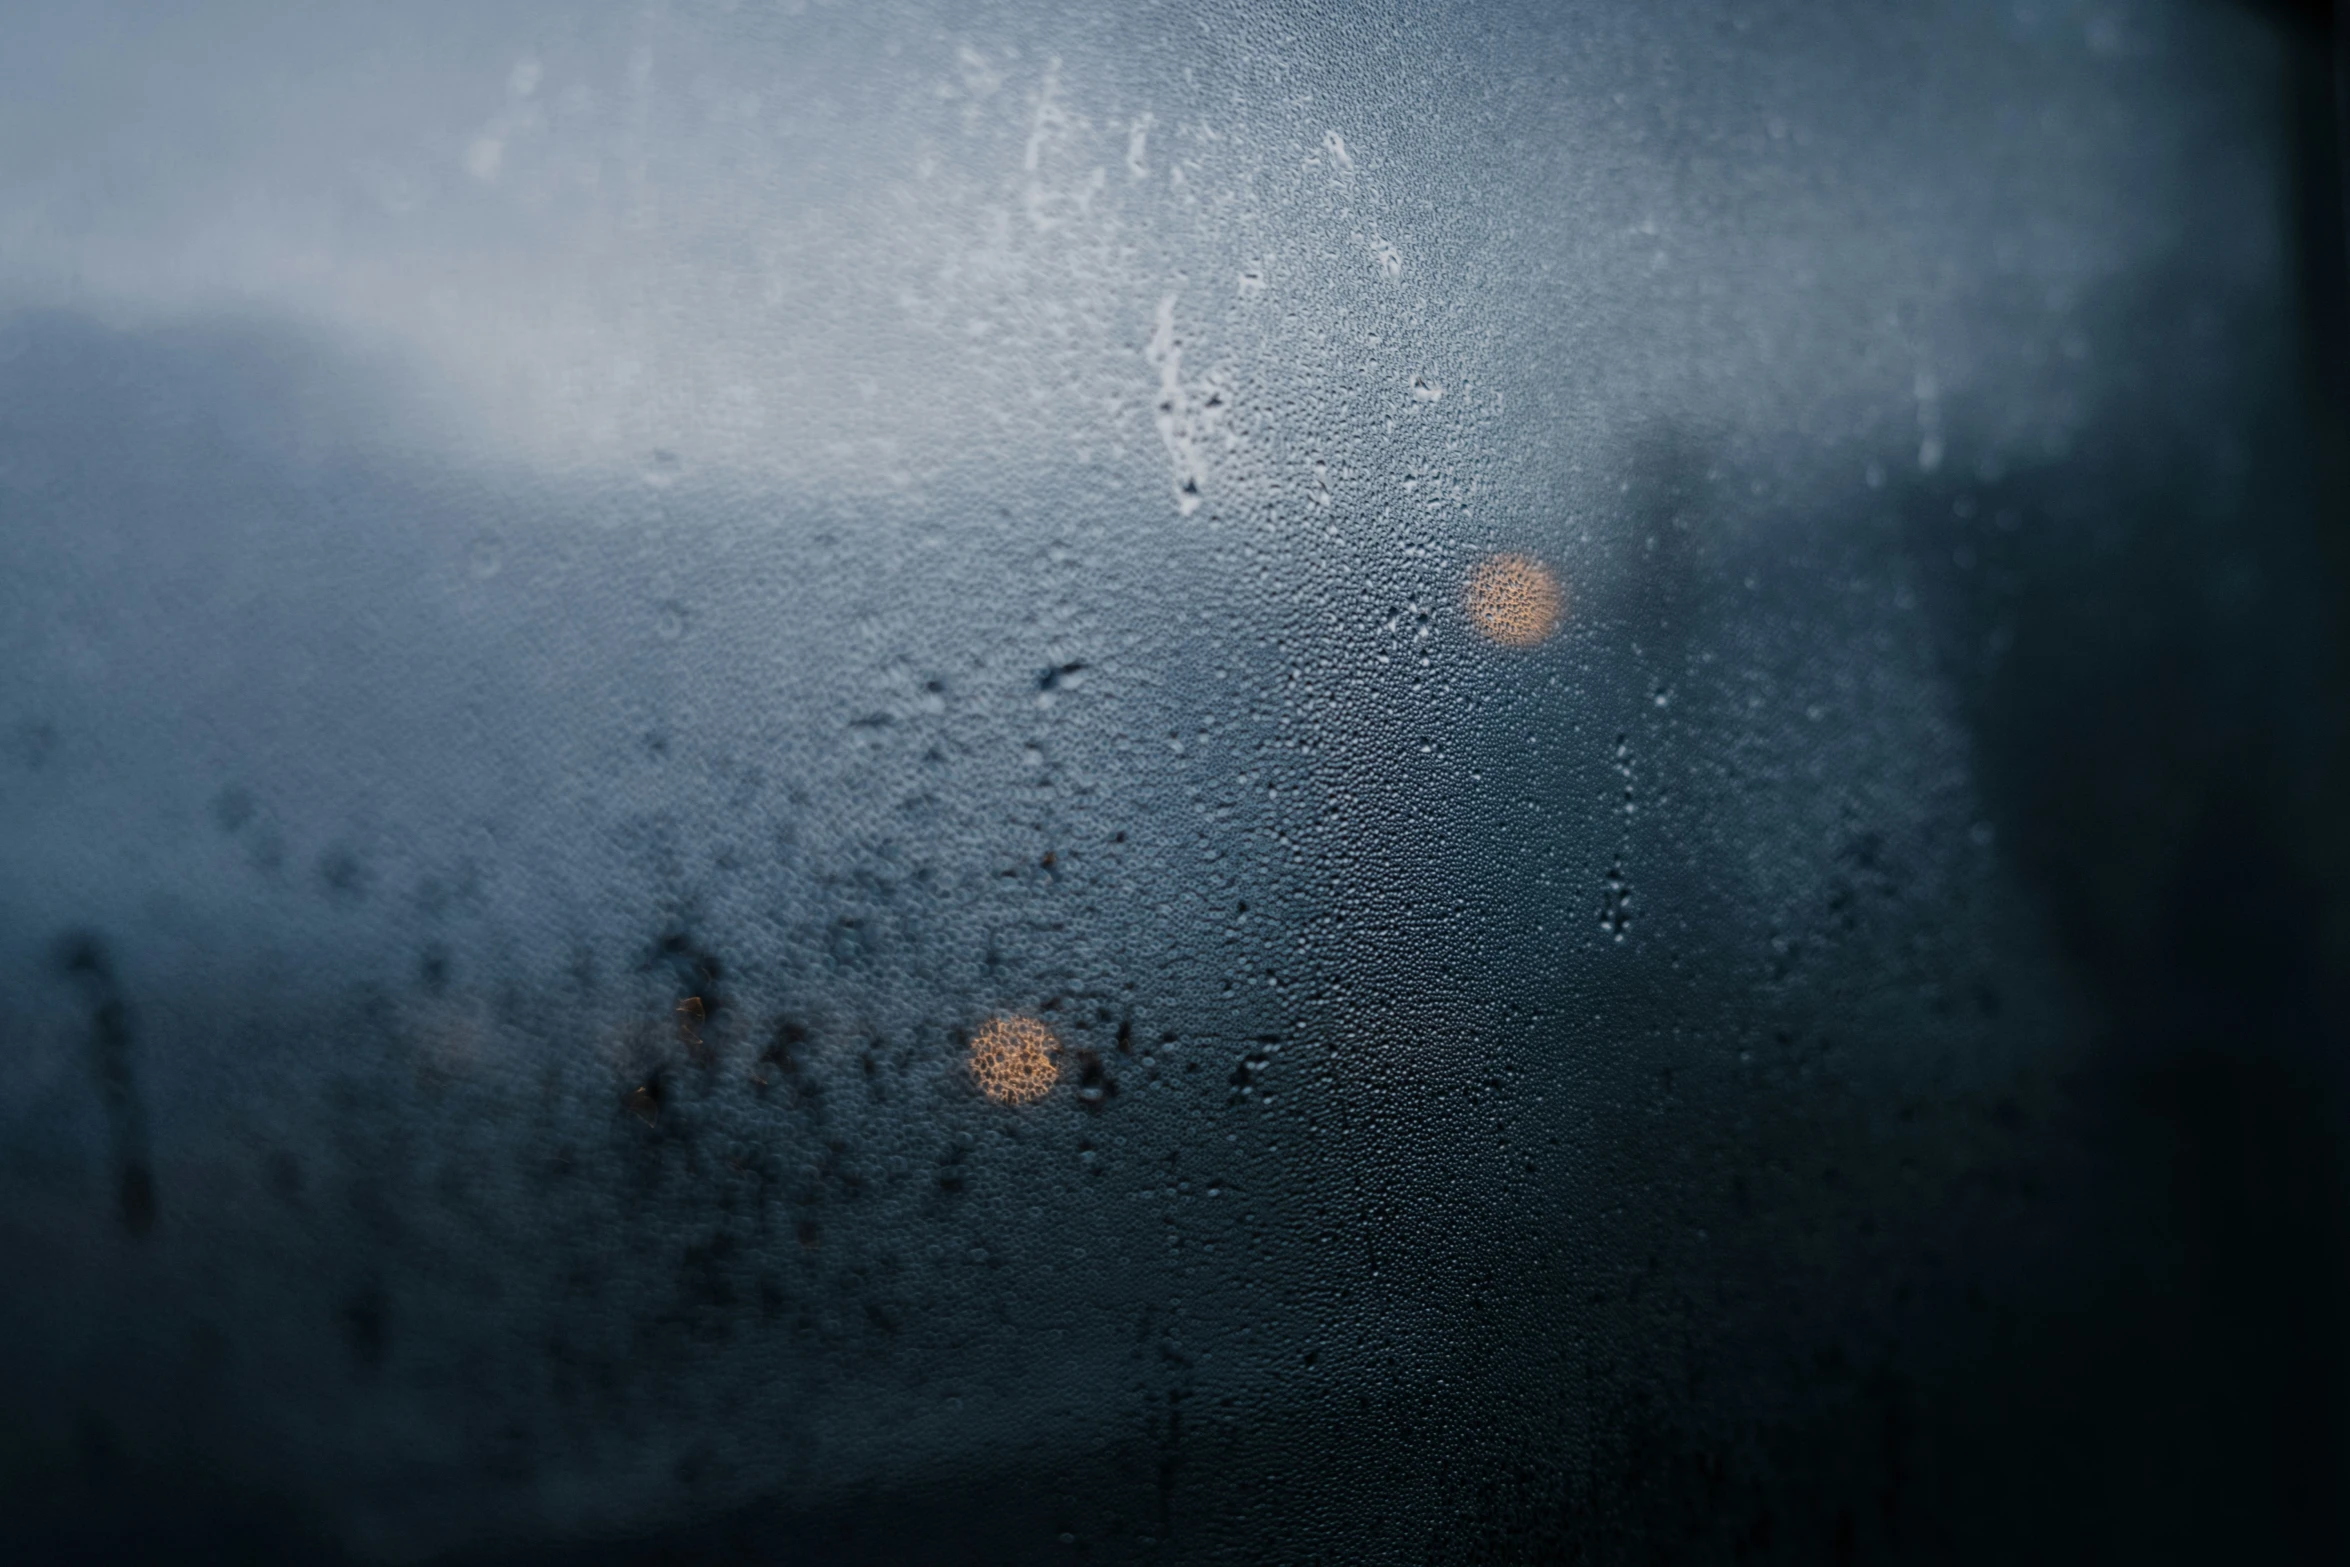 rain fell on the window and light shines through